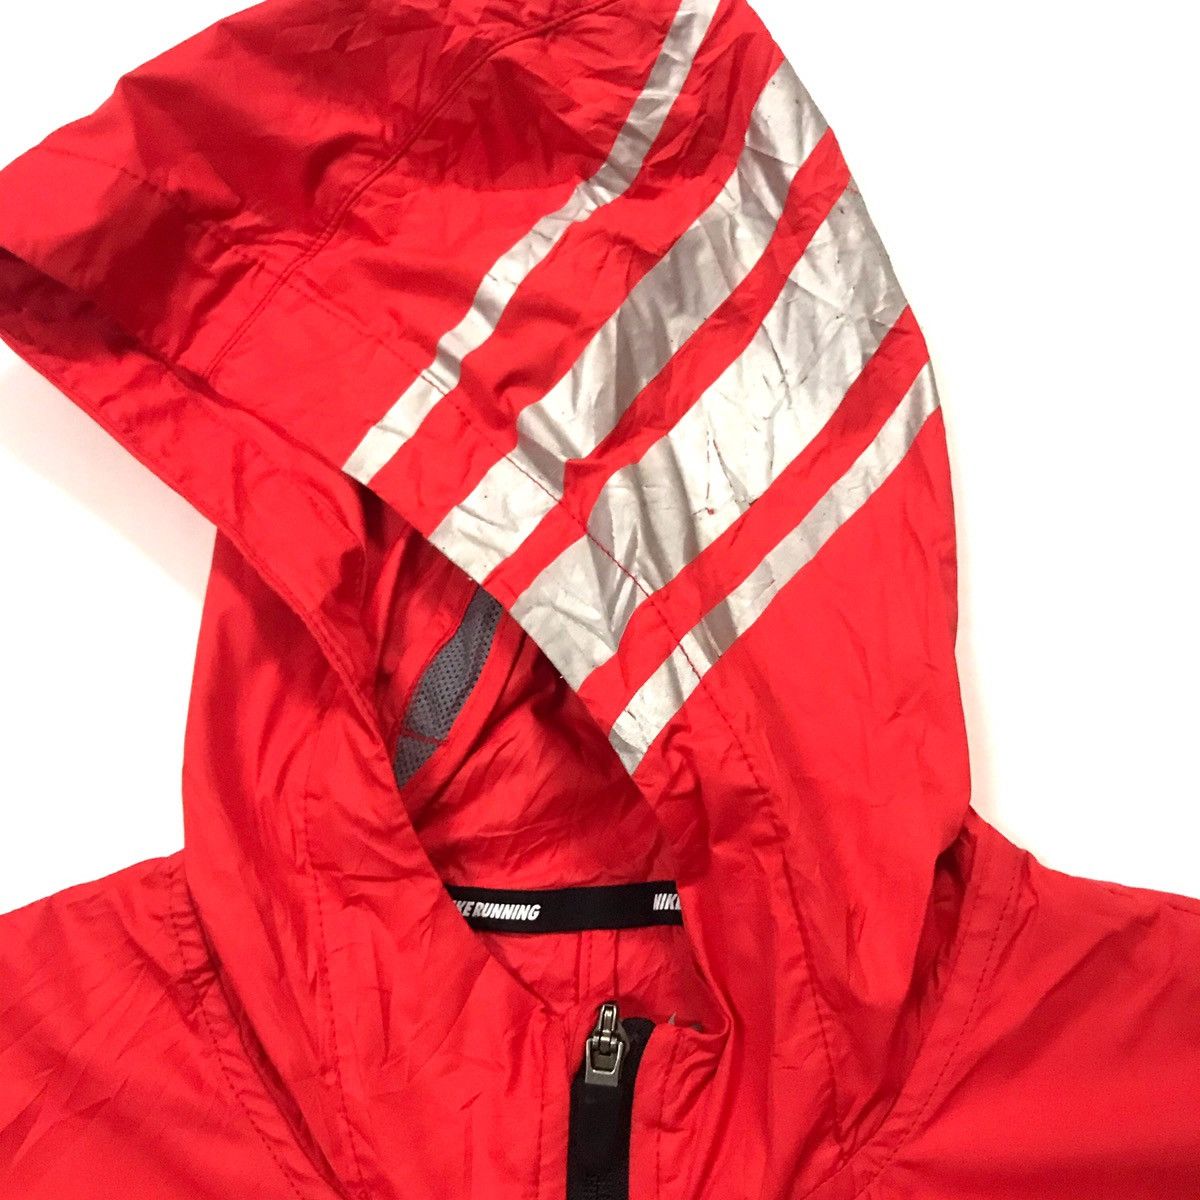 Nike Nike running vest hoodie Size US M / EU 48-50 / 2 - 6 Thumbnail